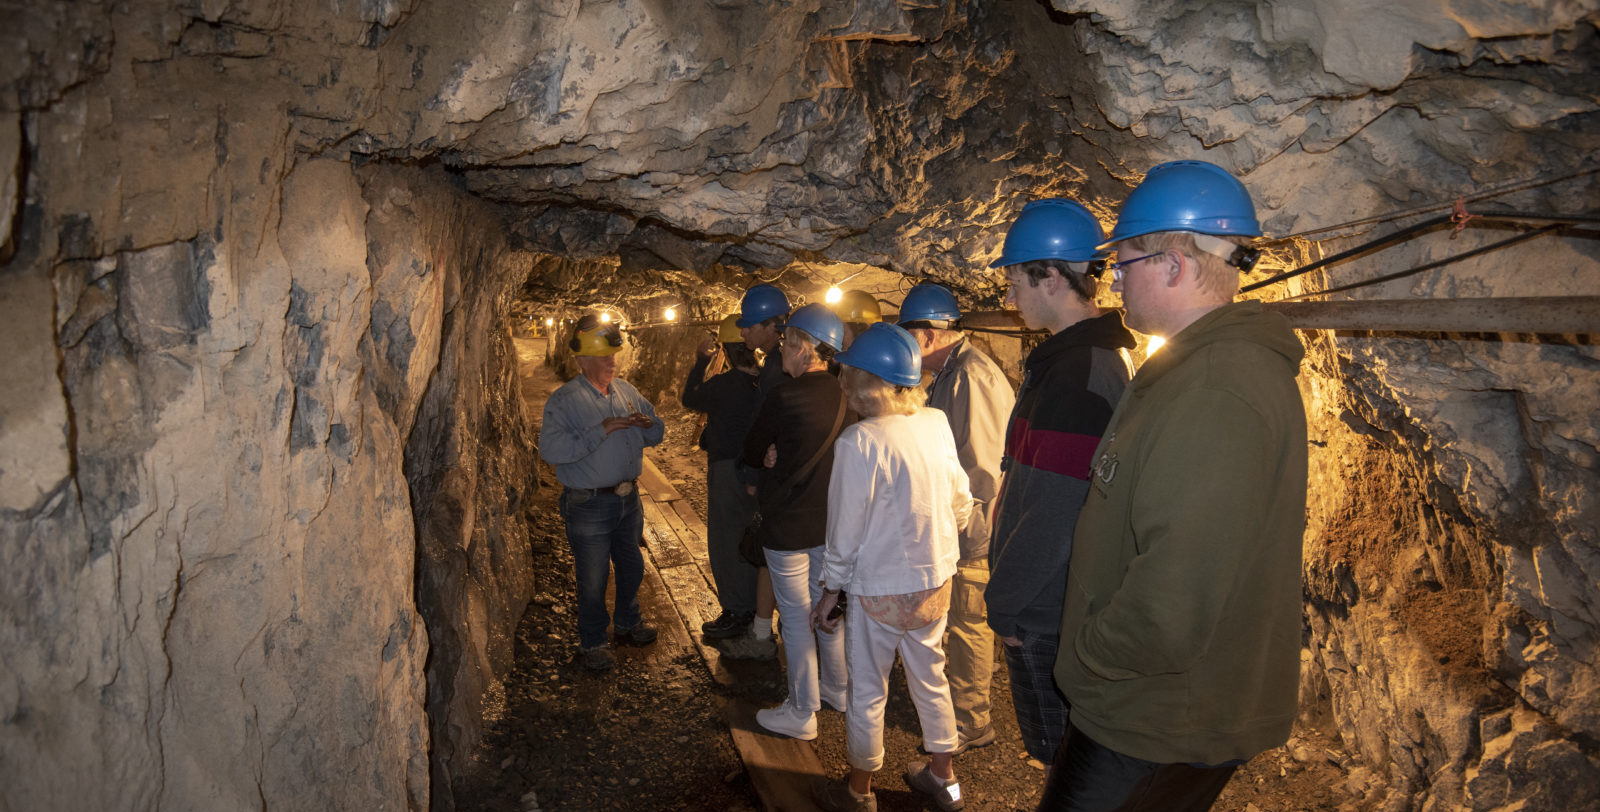 A tour group walking through a mine shaft.